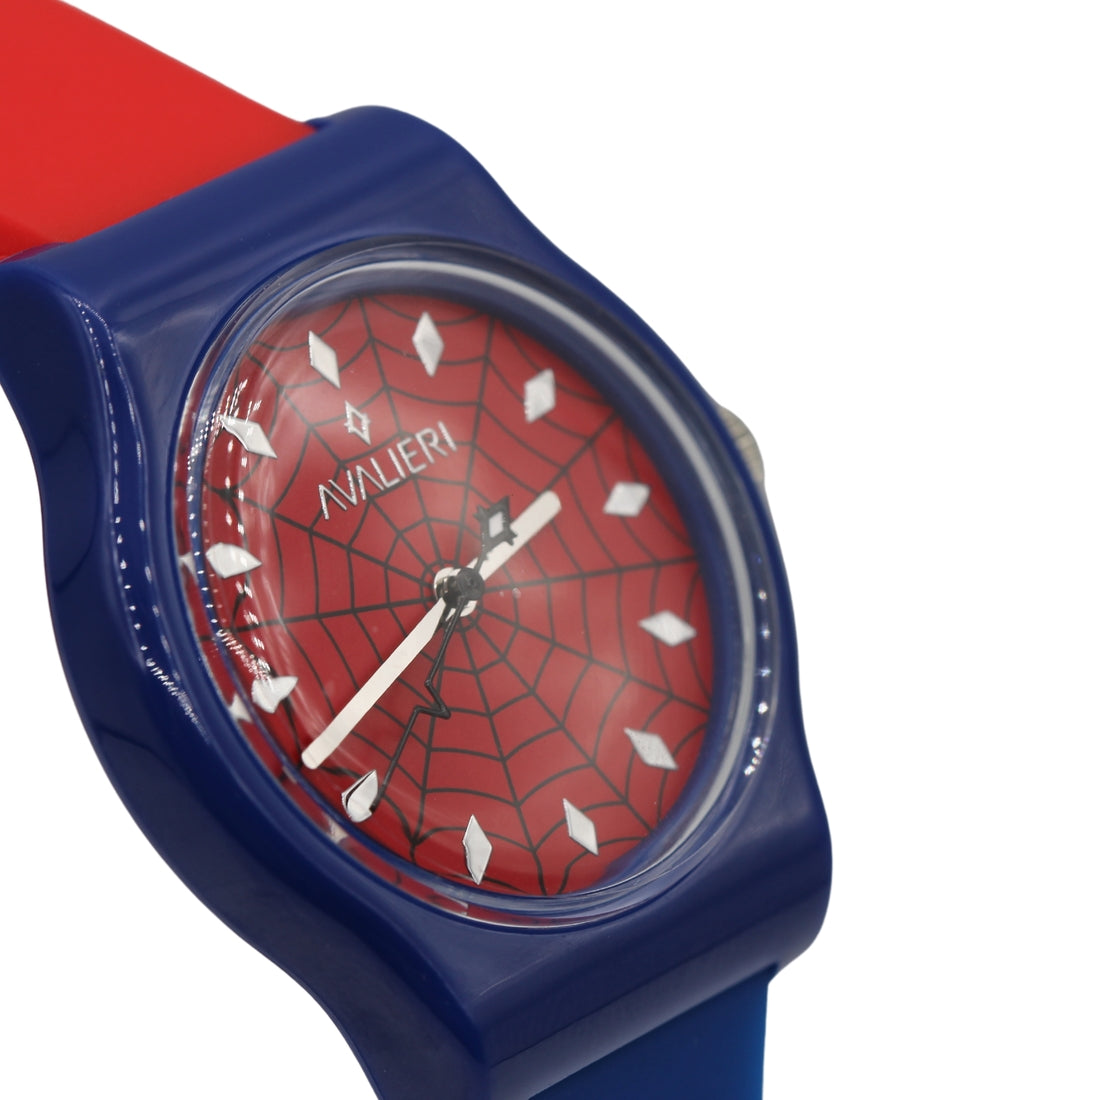 Avalieri Kids' Quartz Watch, Red Dial - AVK-0006